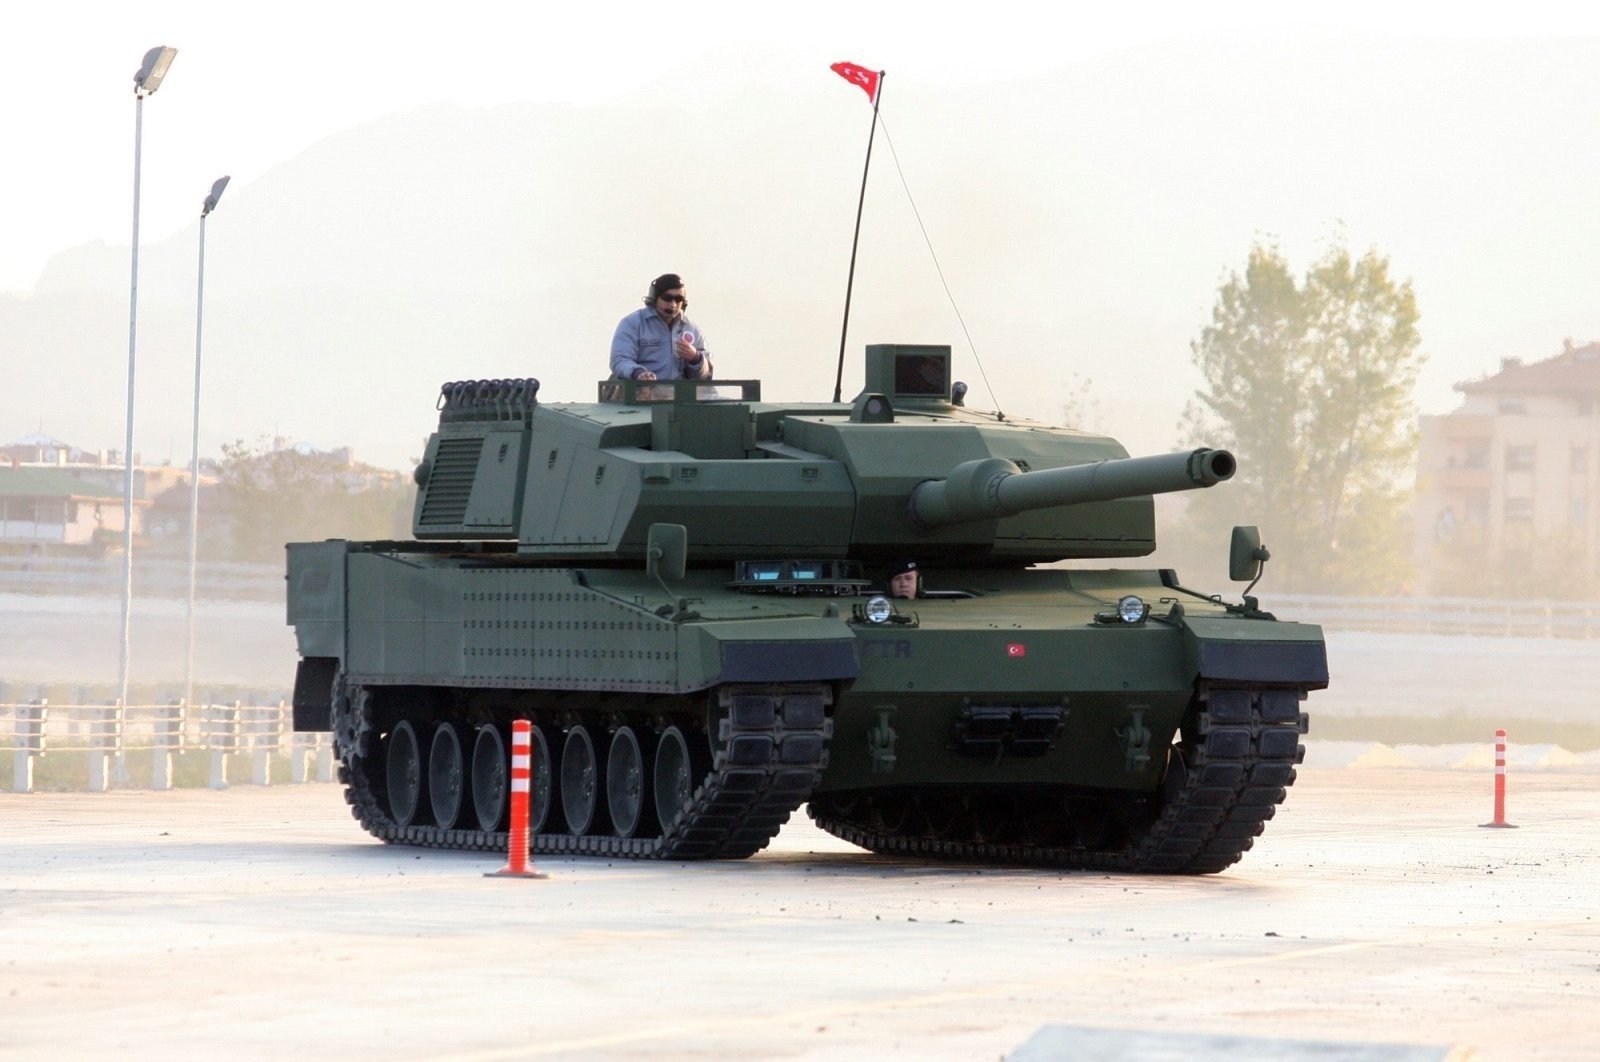 Türkiye&#039;s main battle tank Altay is seen in this file photo, Nov. 15, 2012. (Photo by Mesut Er)
